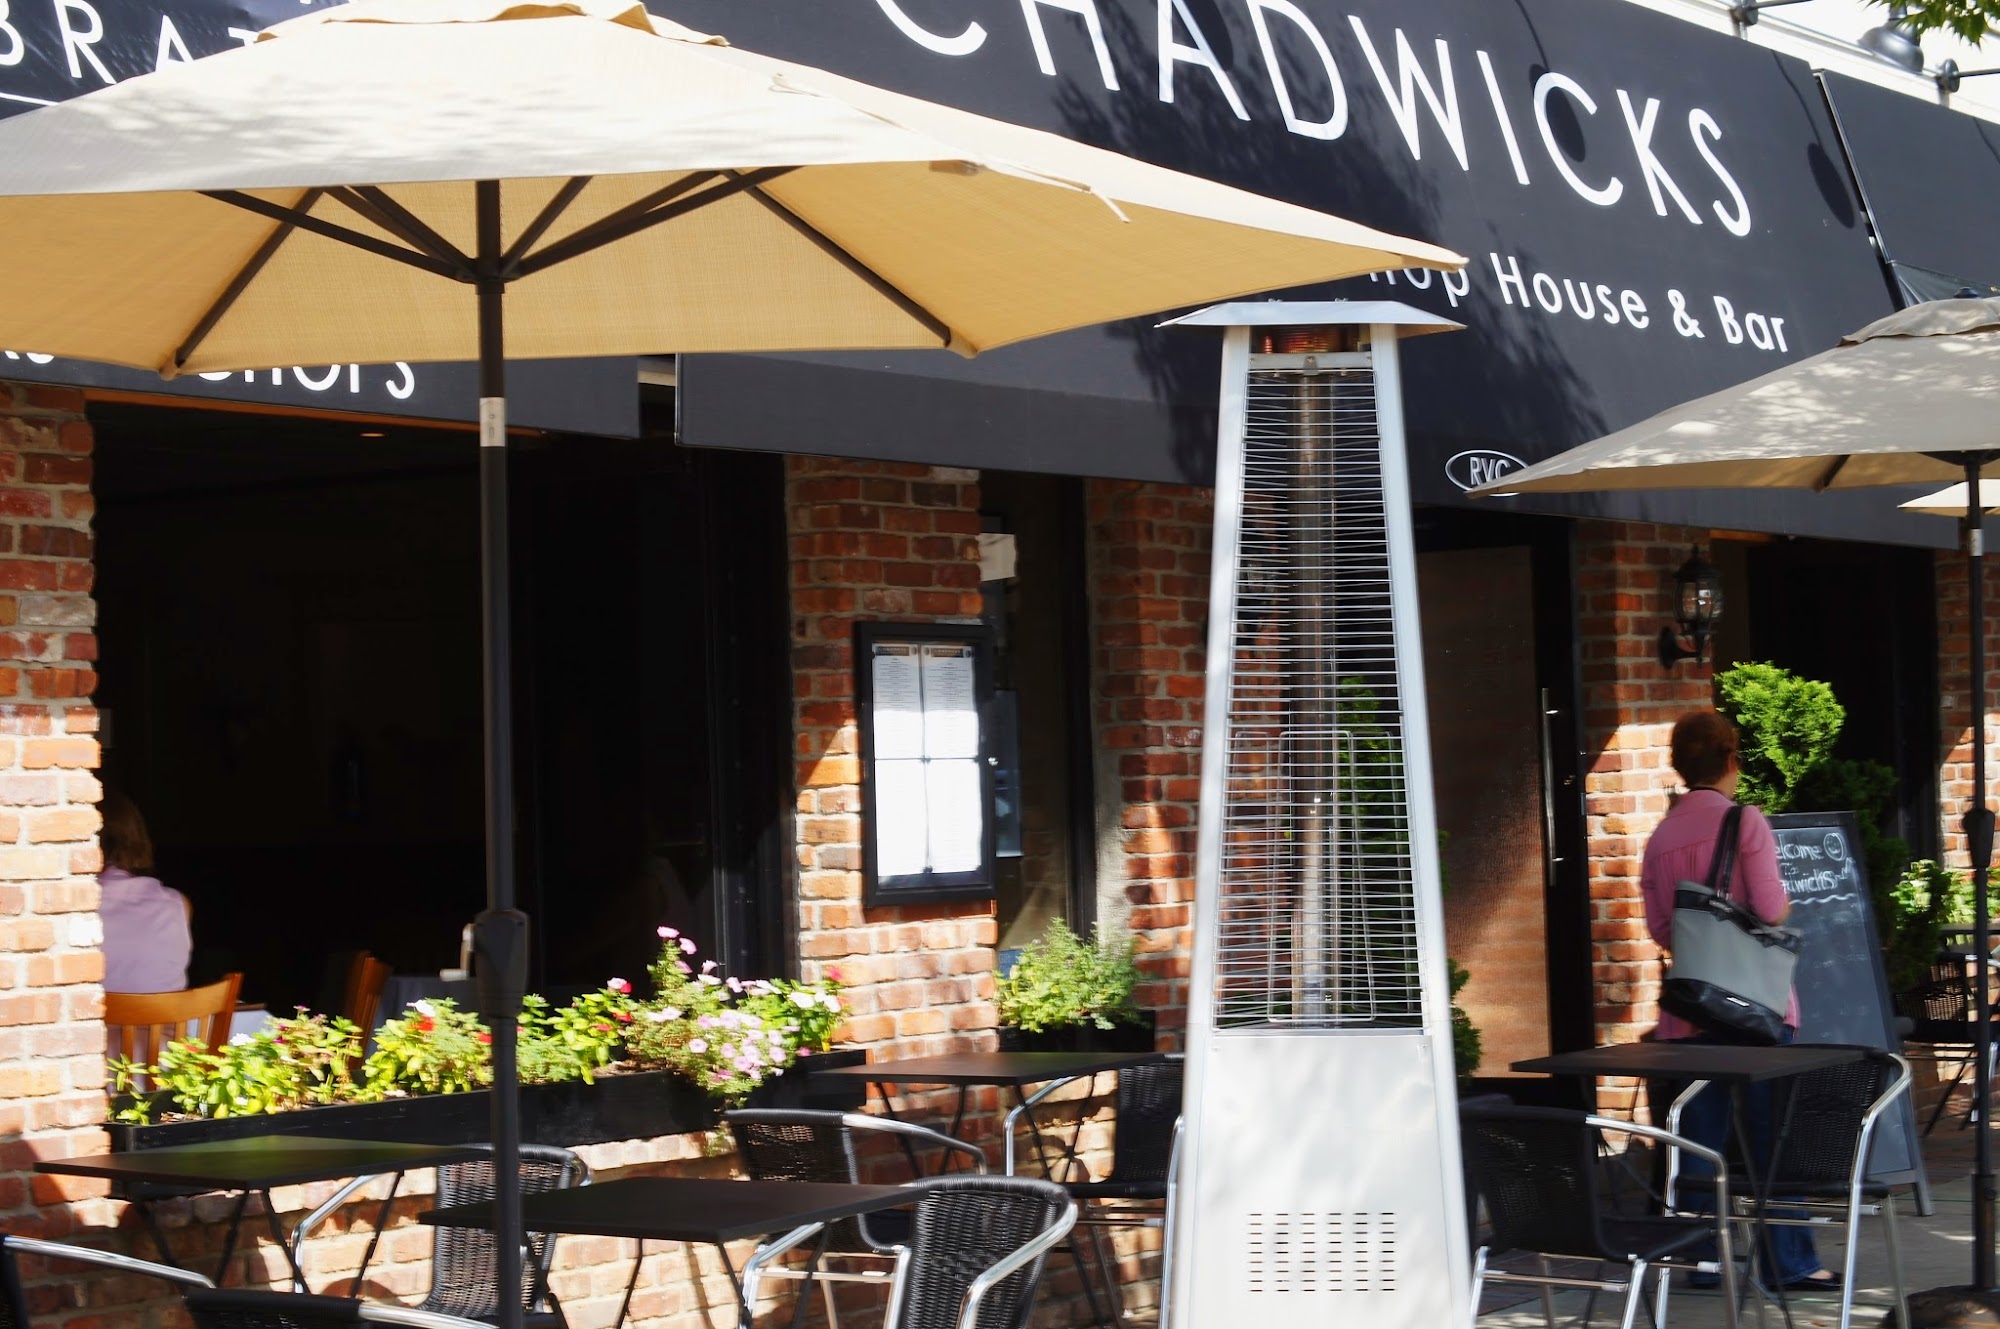 Chadwick's American Chop House & Bar